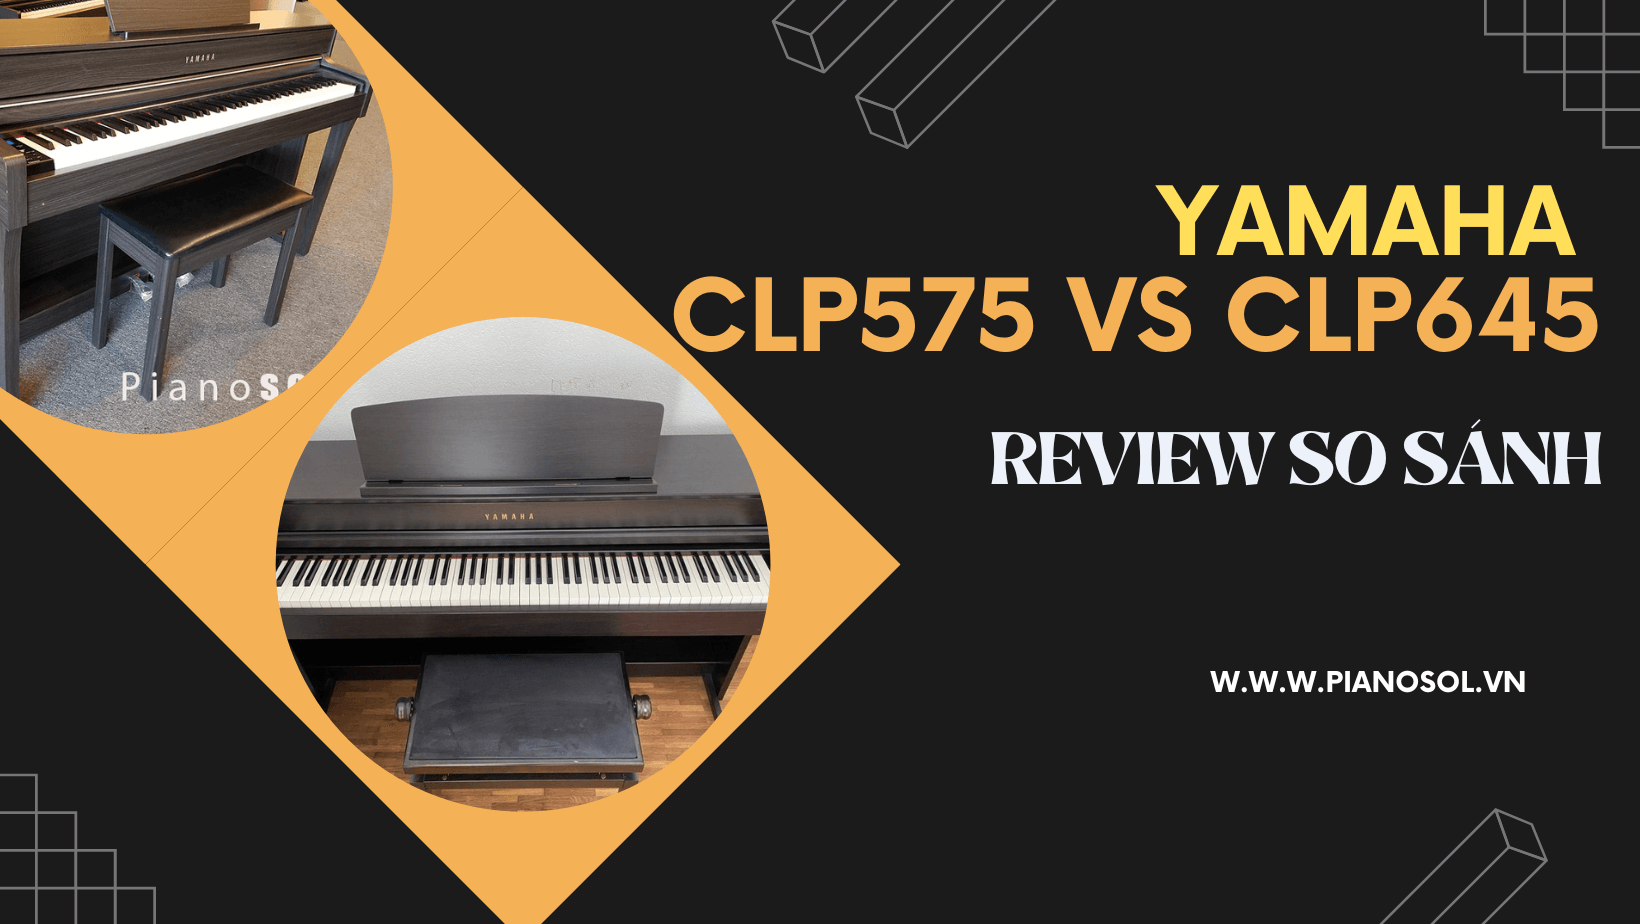 Review So sánh Piano Yamaha CLP575 và Yamaha CLP645